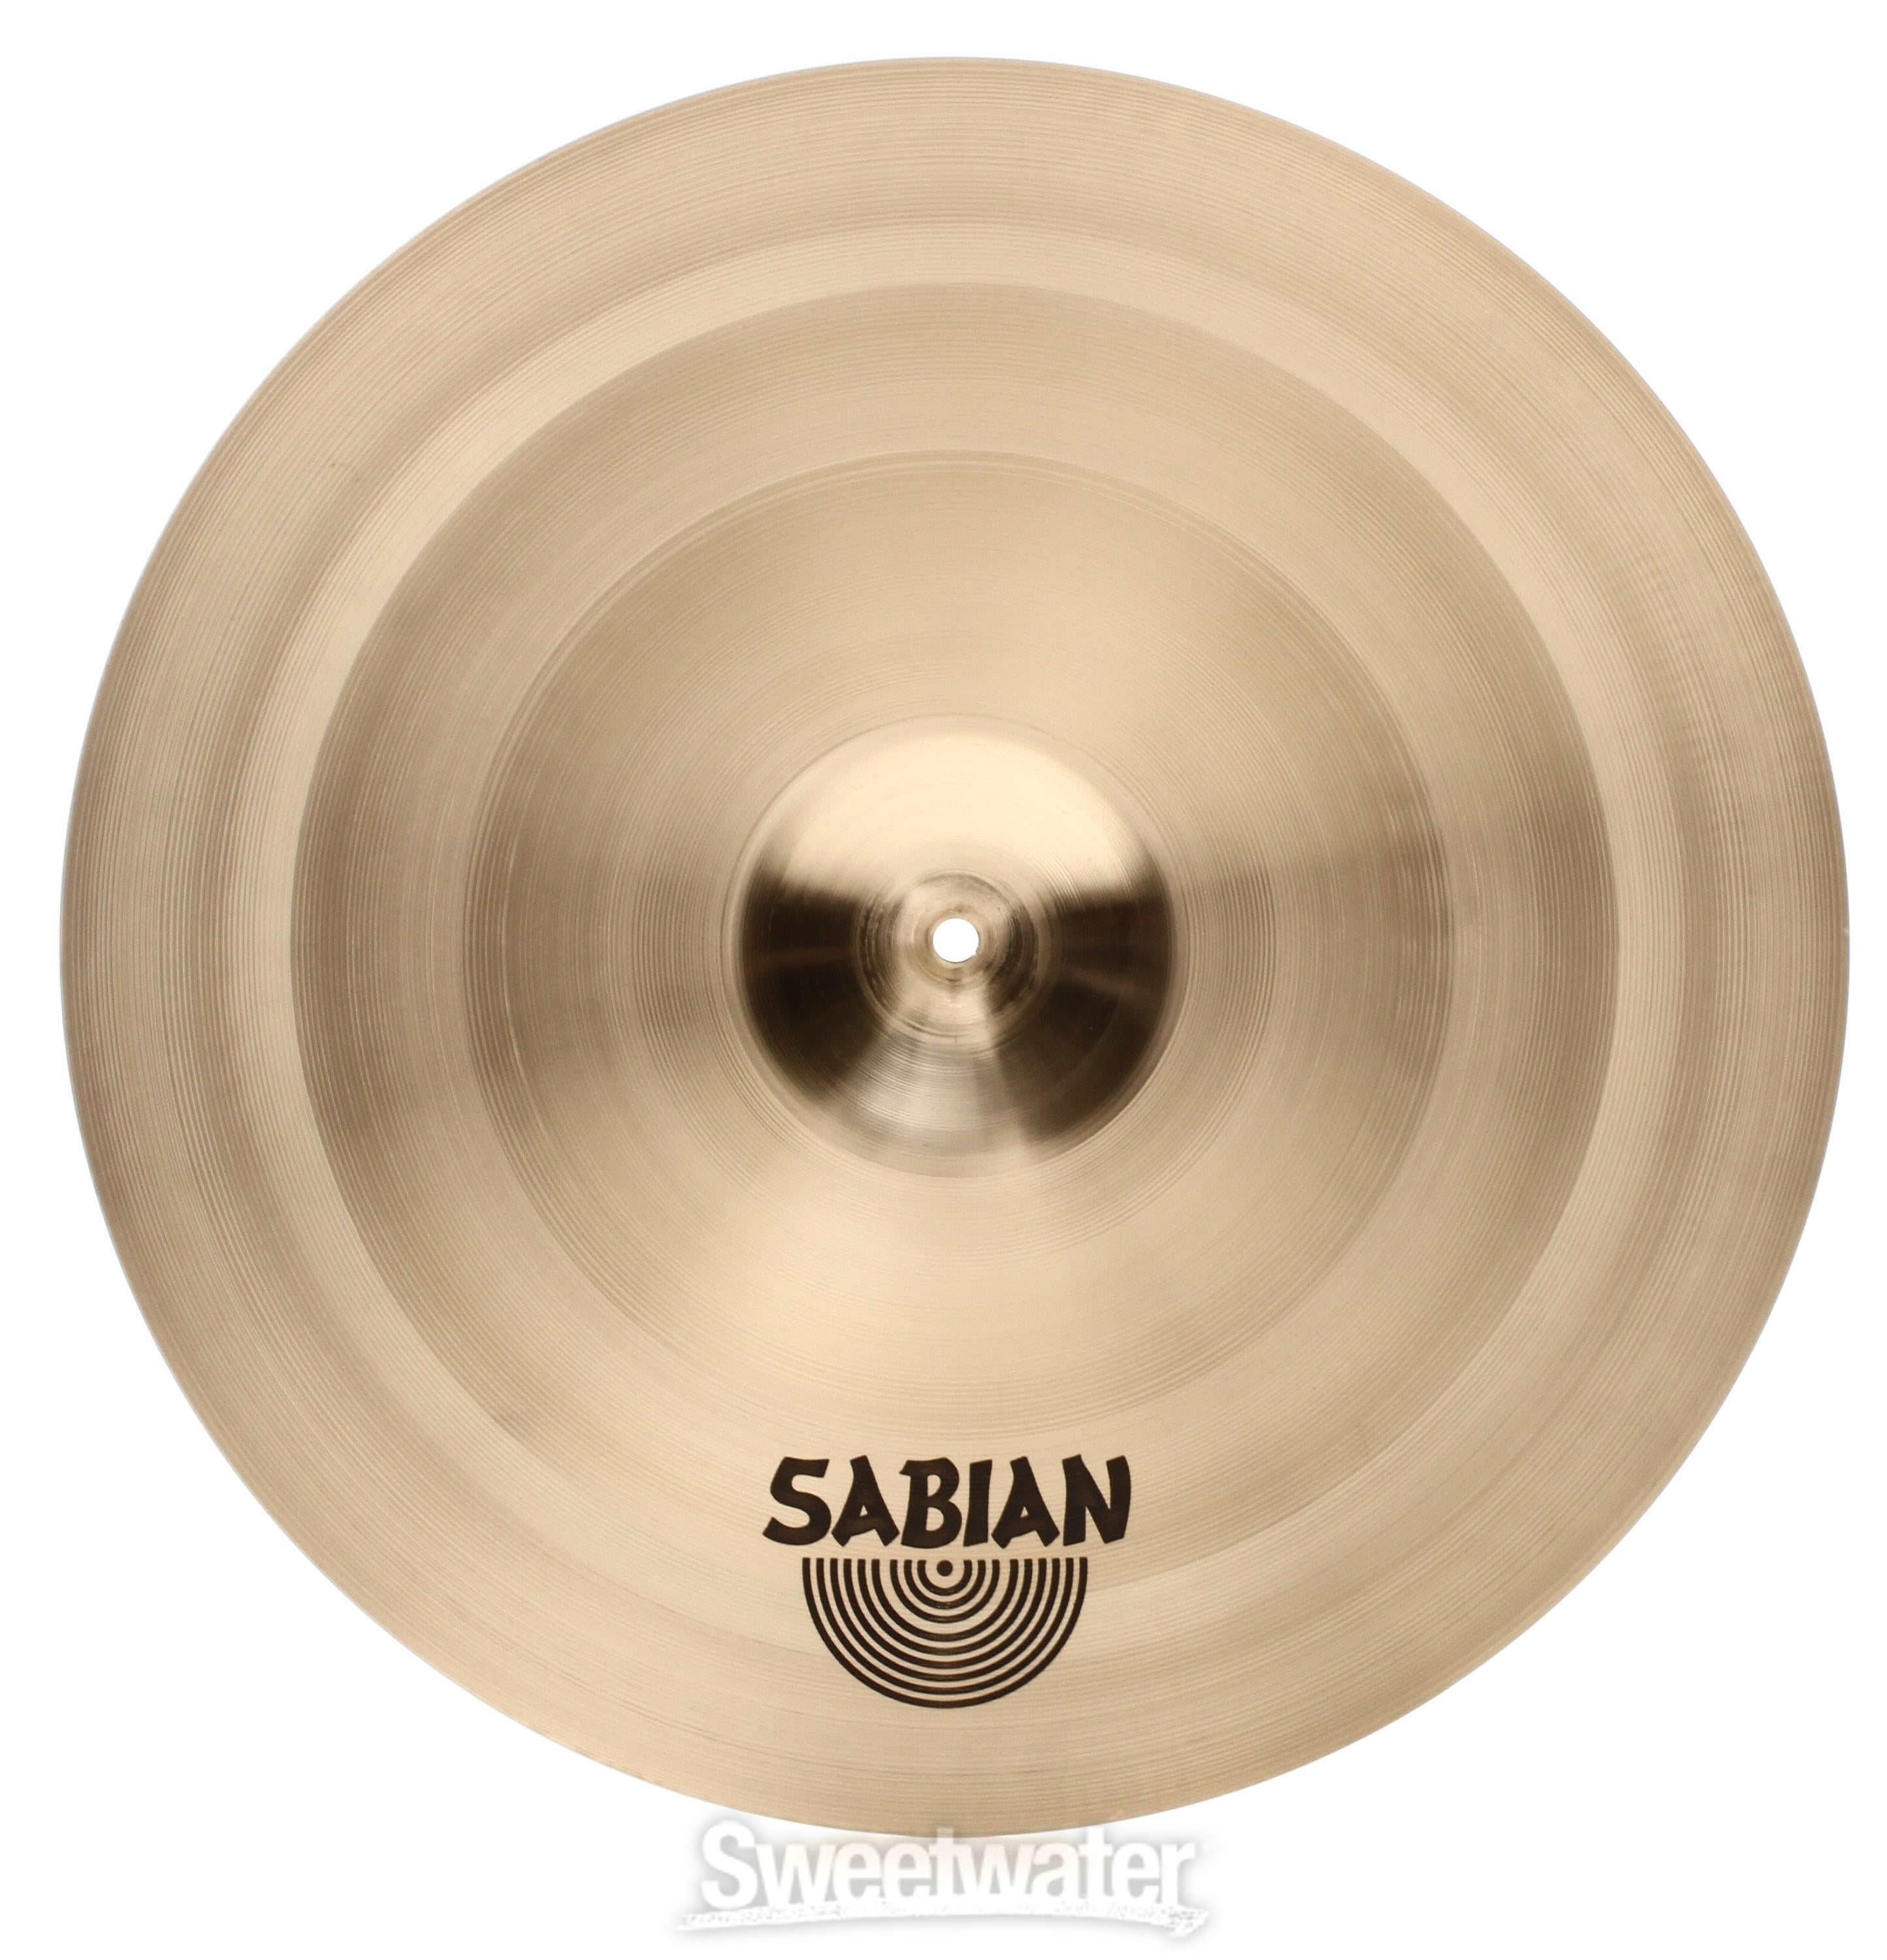 Sabian AAX Stage Ride Cymbal - 20